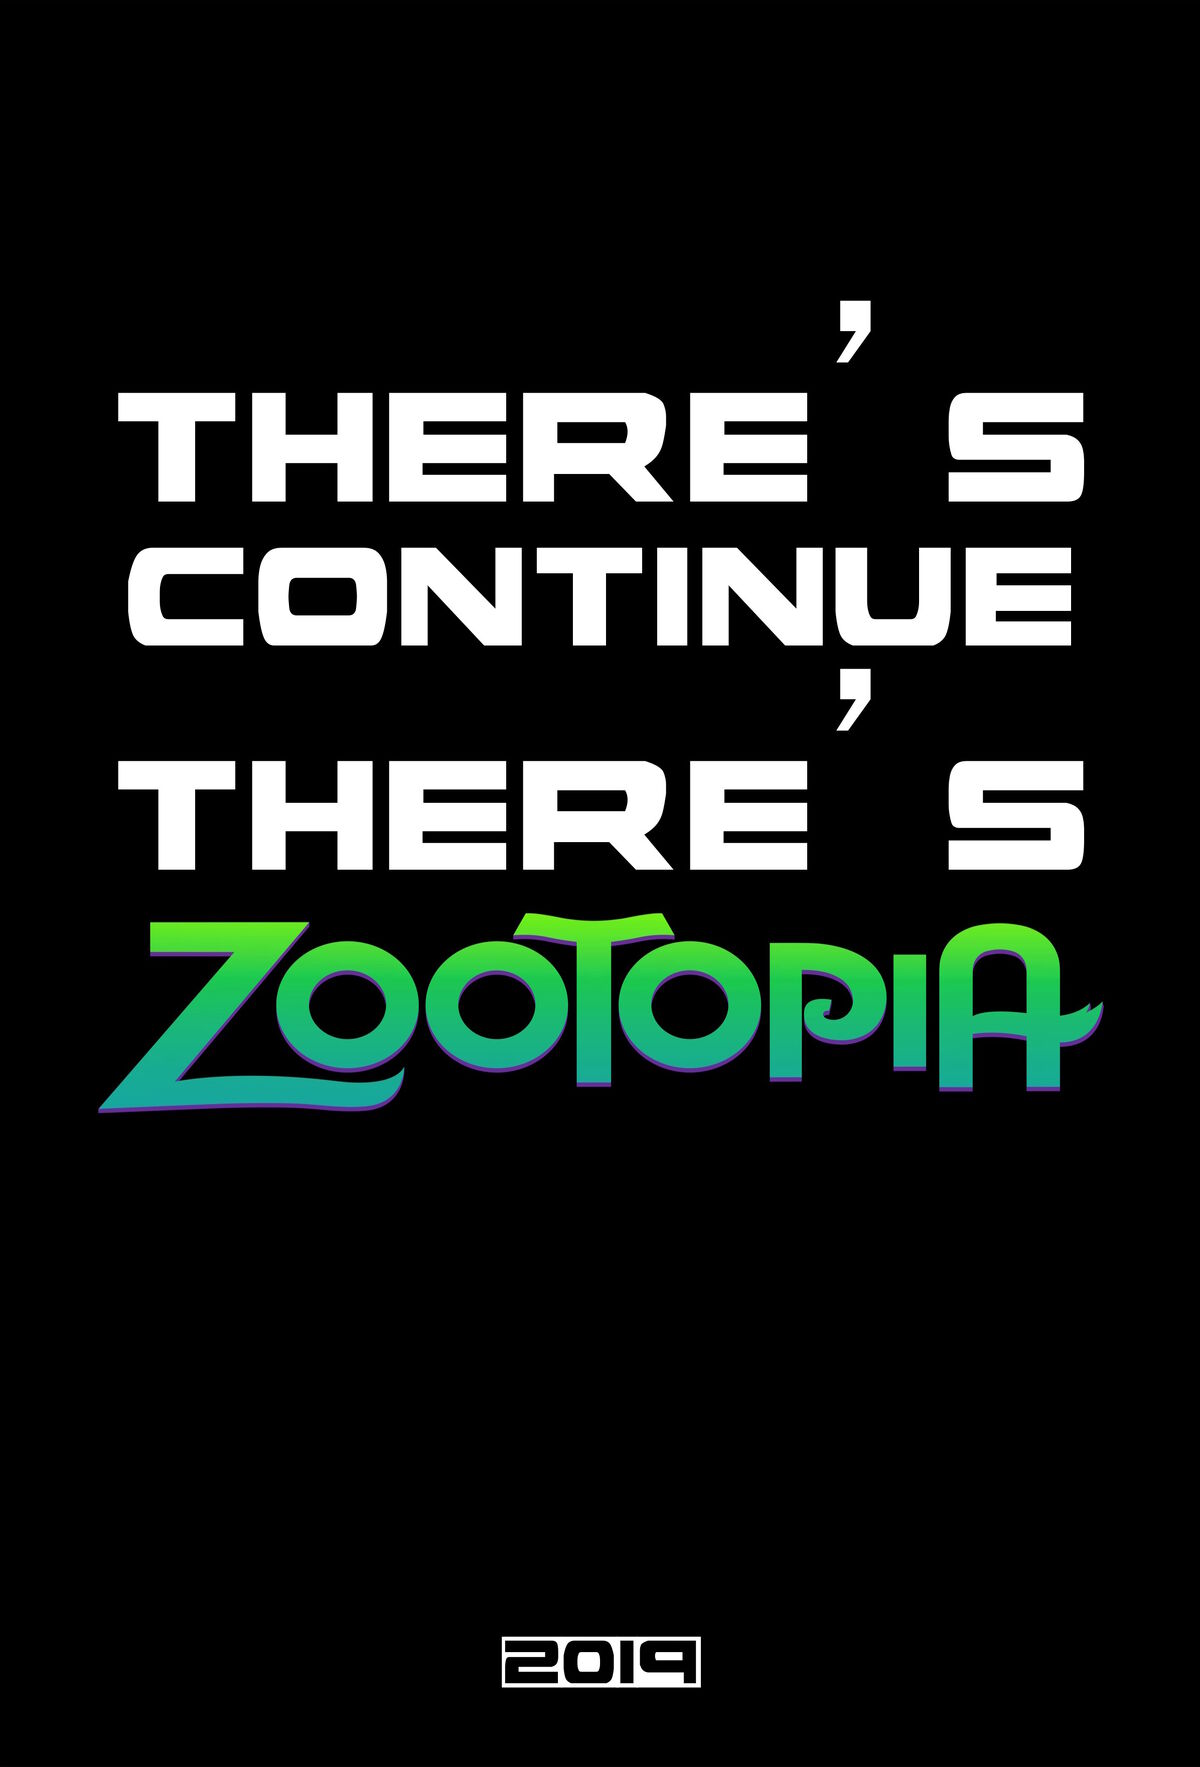 Zootopia 2 (2021 film), Idea Wiki